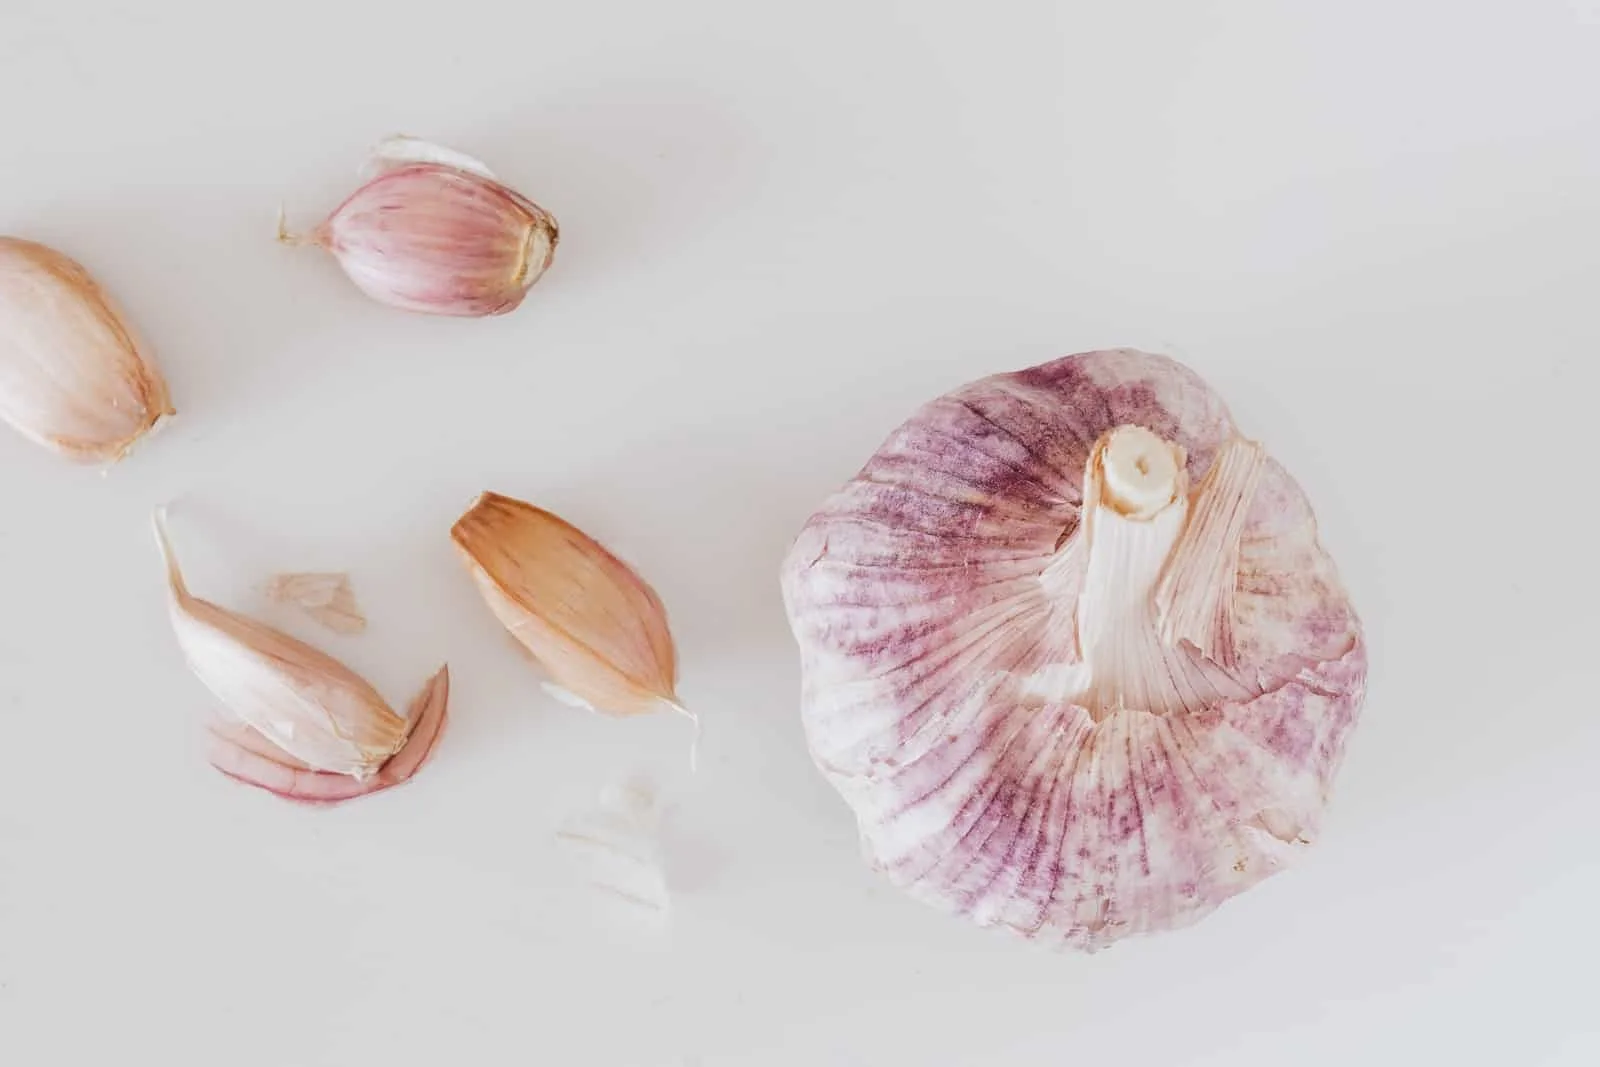 garlic and cloves